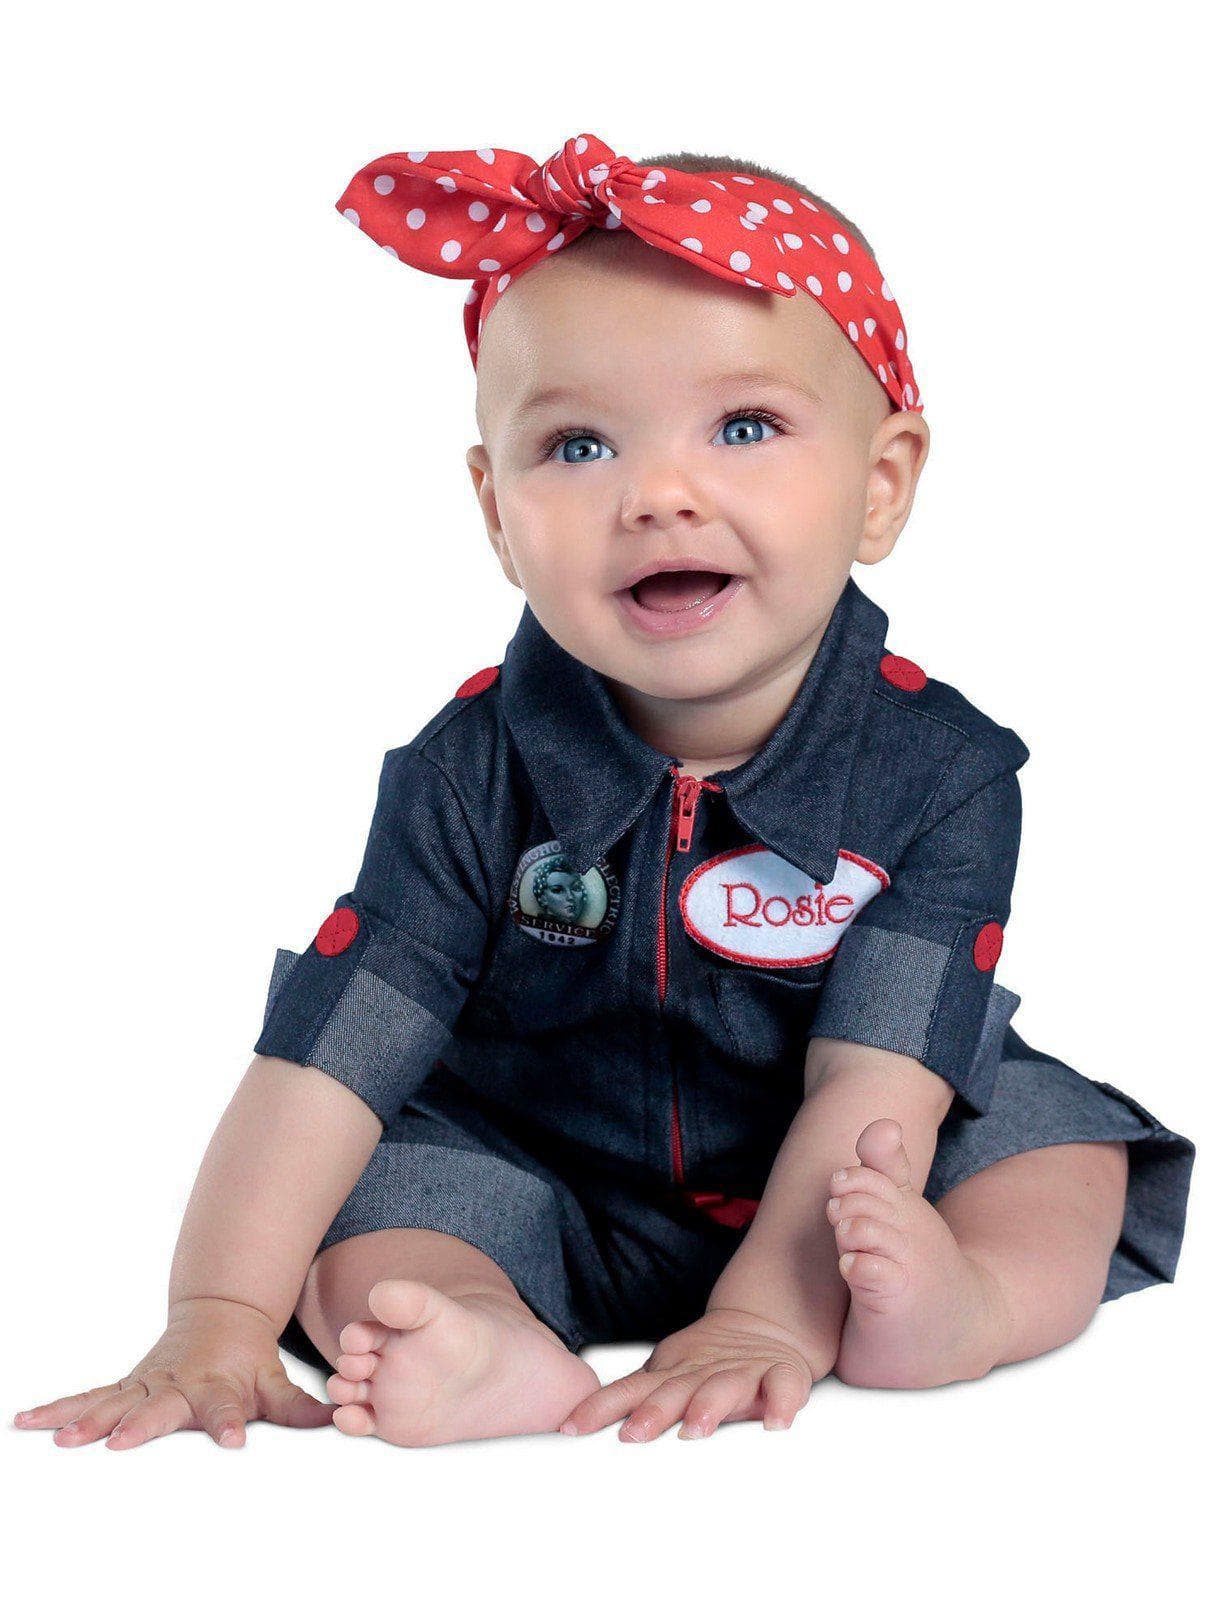 Baby/Toddler Newborn Rosie the Riveter Costume - costumes.com